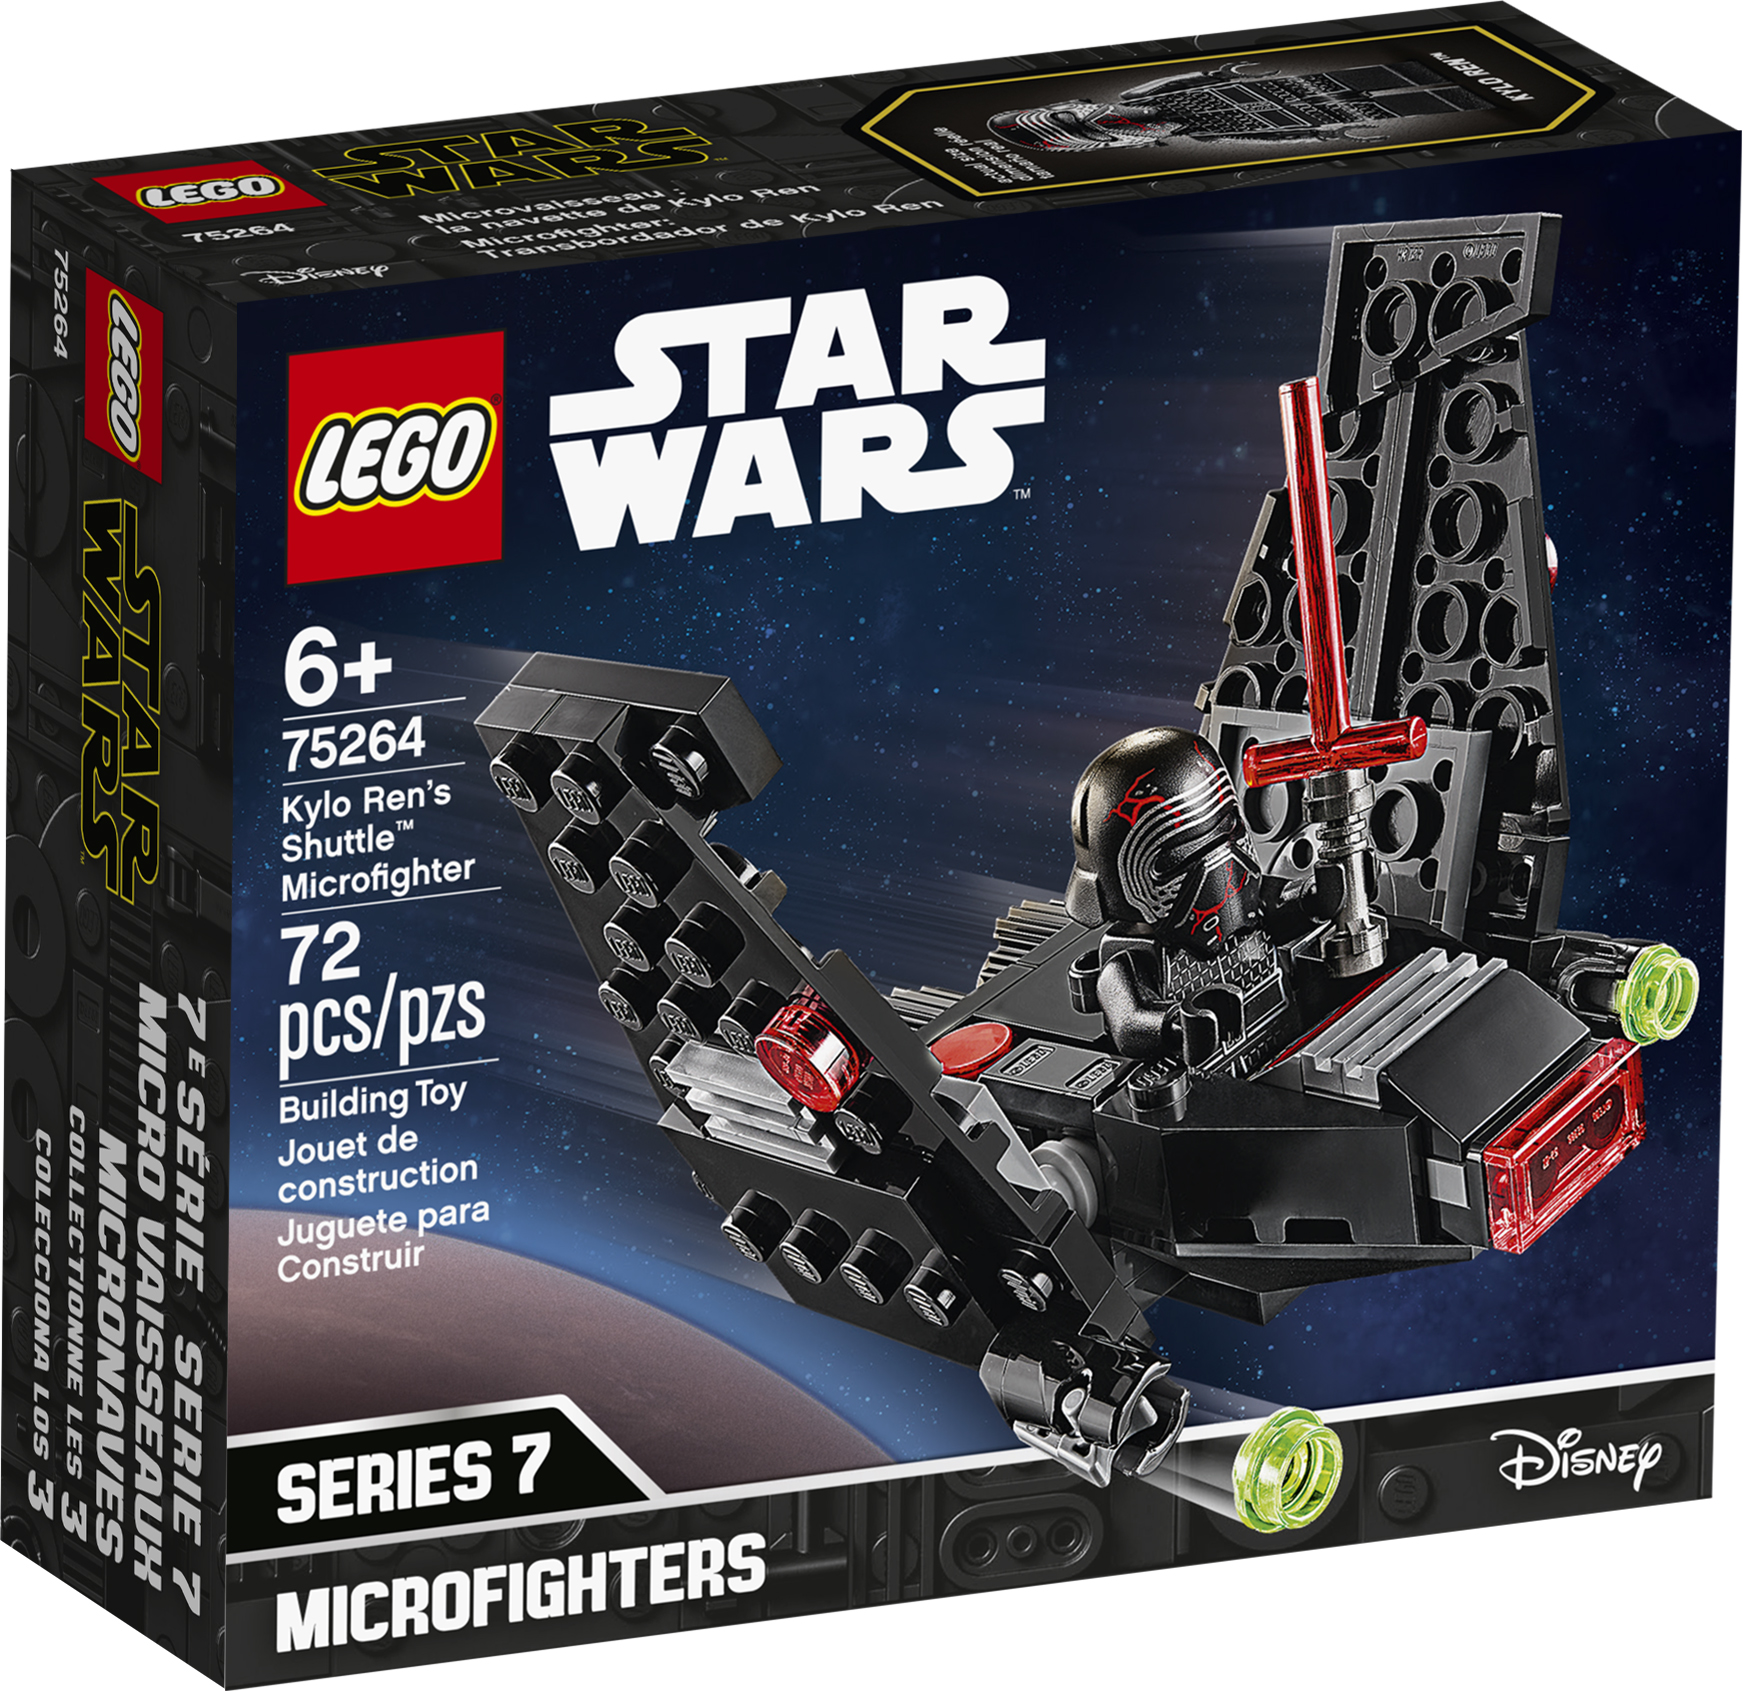 TROS Kylo Ren's Shuttle Microfighter Lego set 1